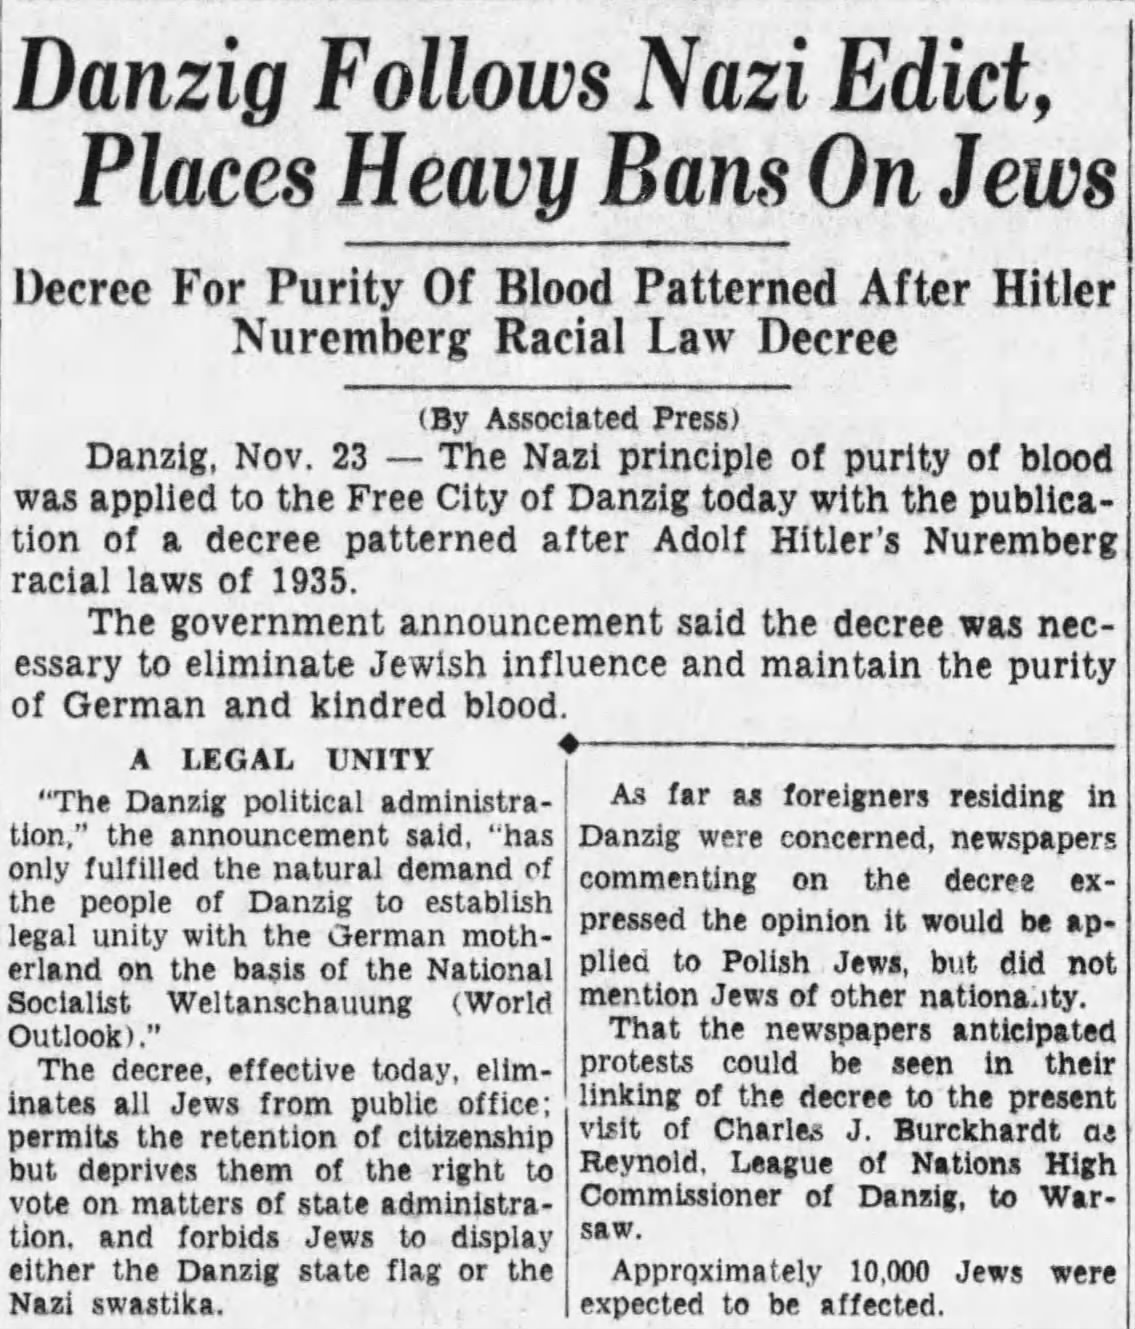 Danzig Follows Nazi Edict, Places Heavy Bans On Jews